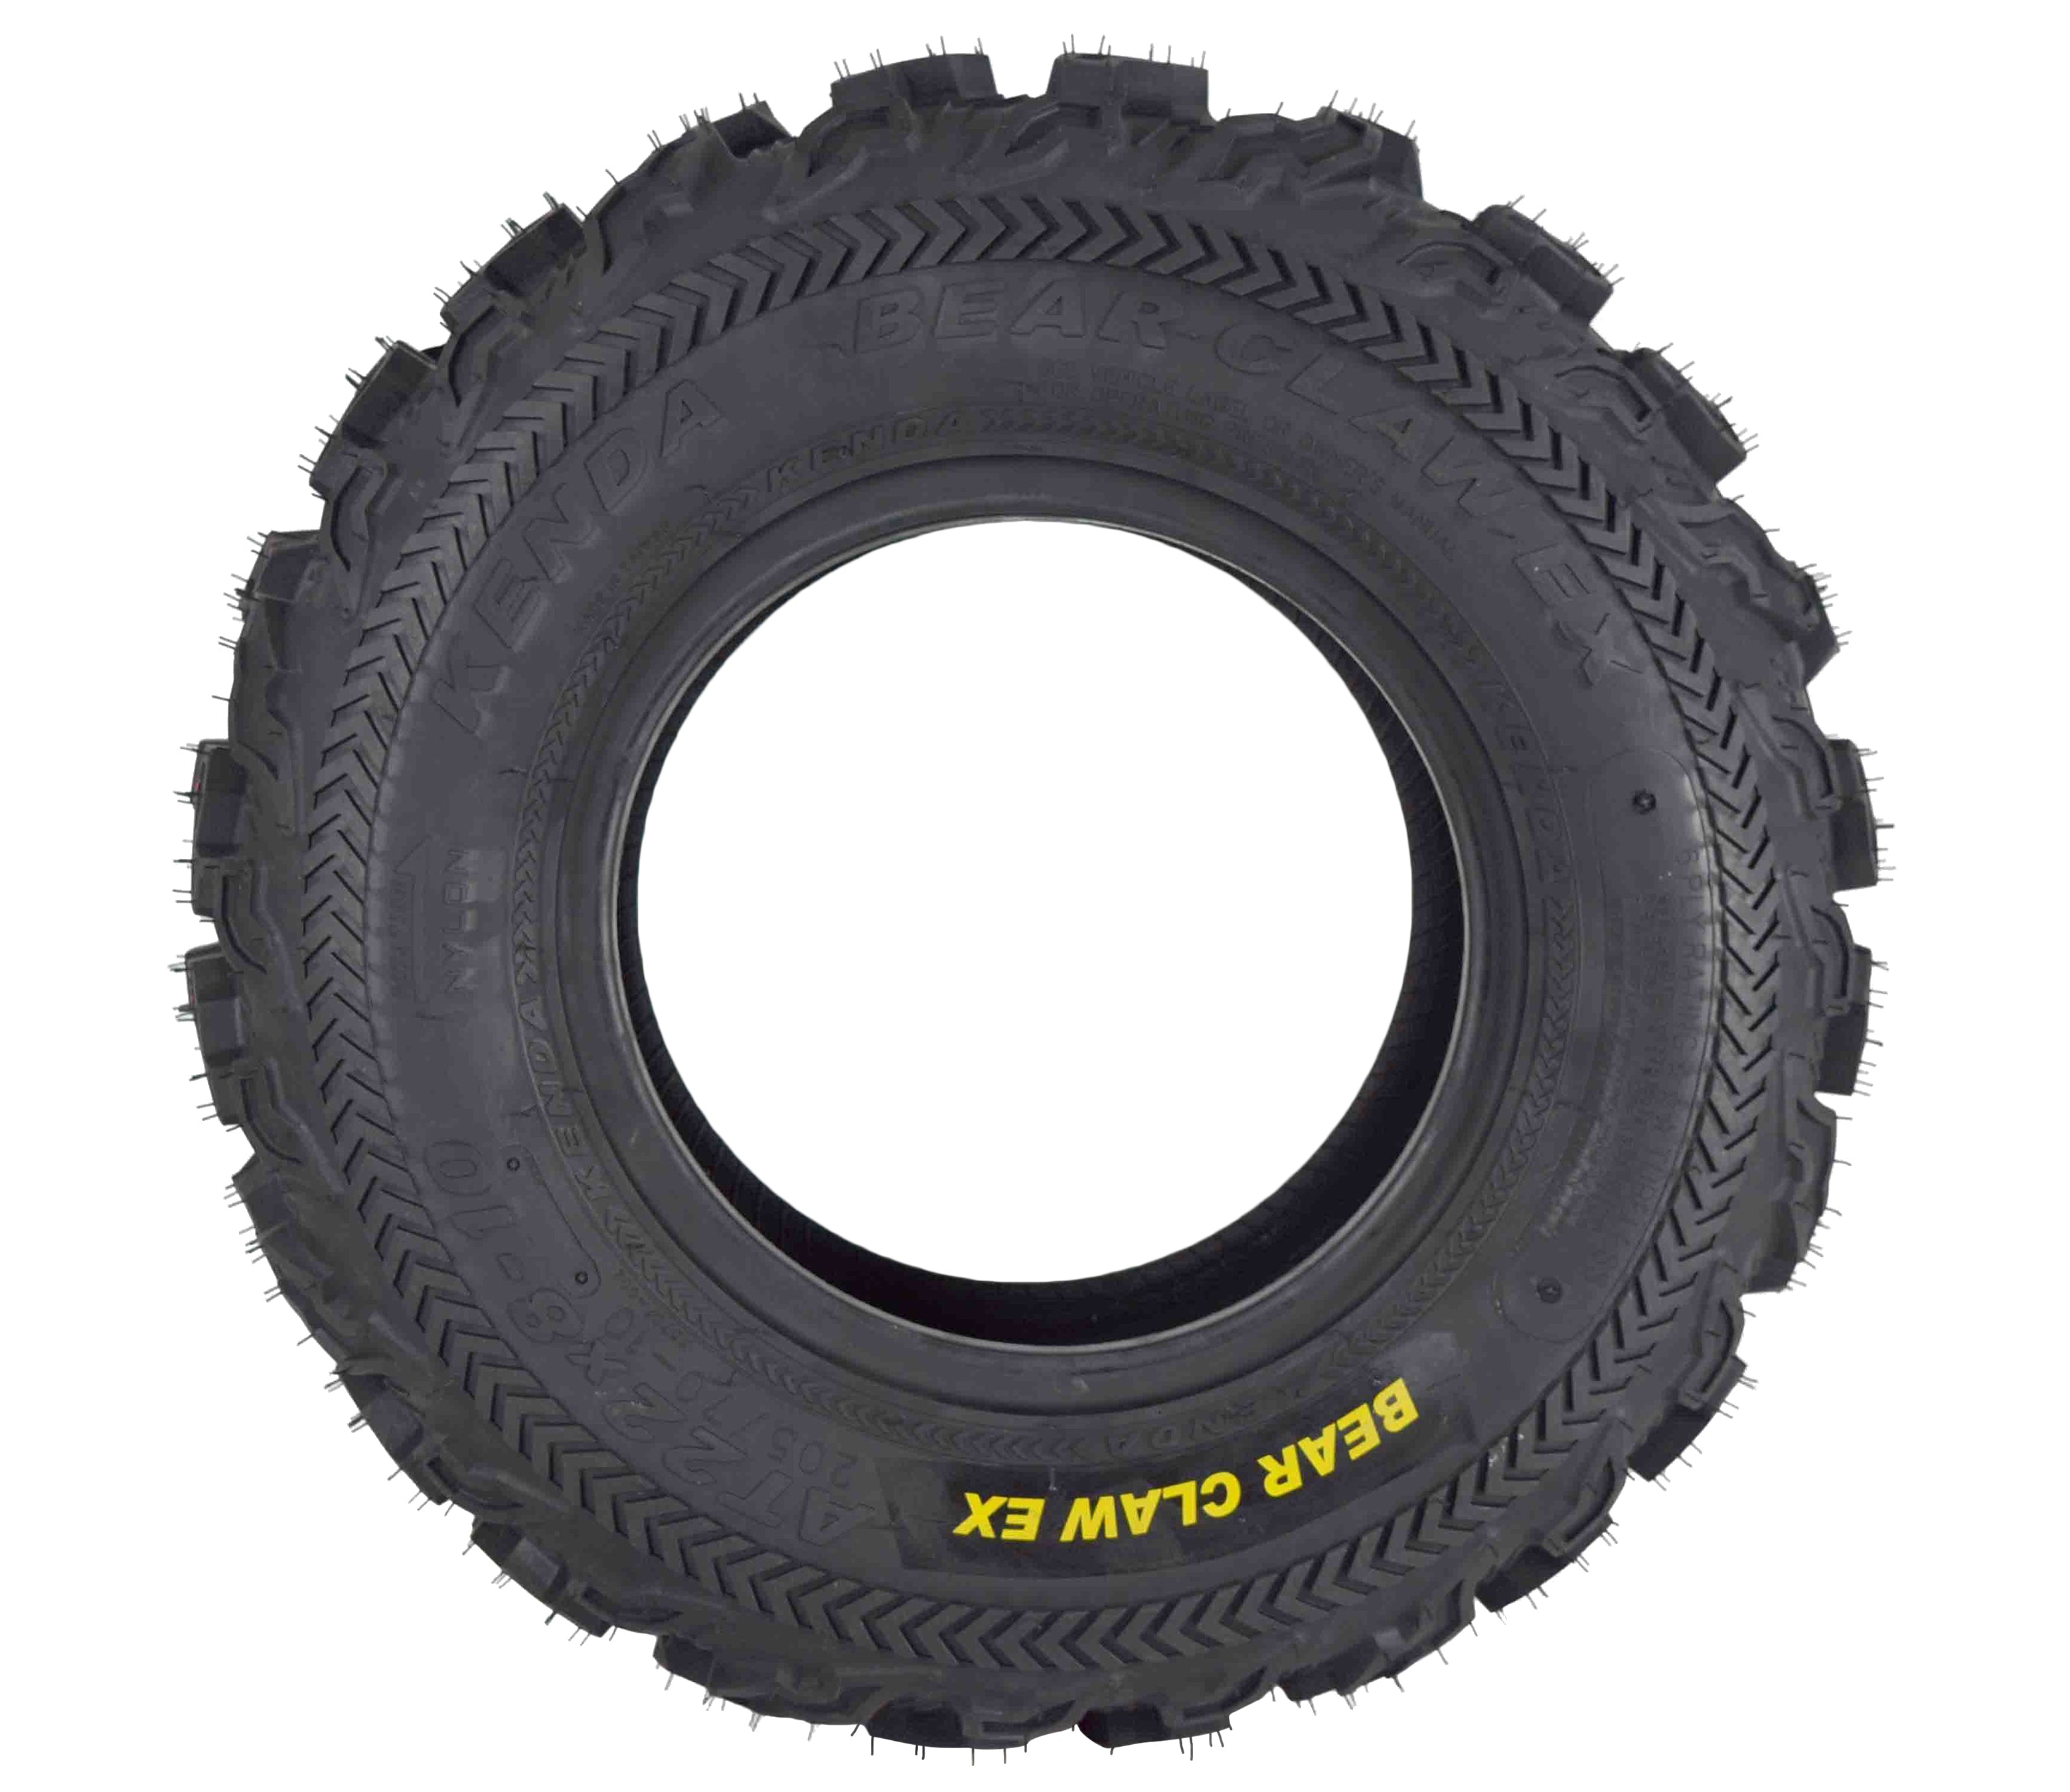 Kenda Bear Claw EX 22x8-10 F 22x11-10 R ATV 6 PLY Tires Bearclaw (4 Pack)